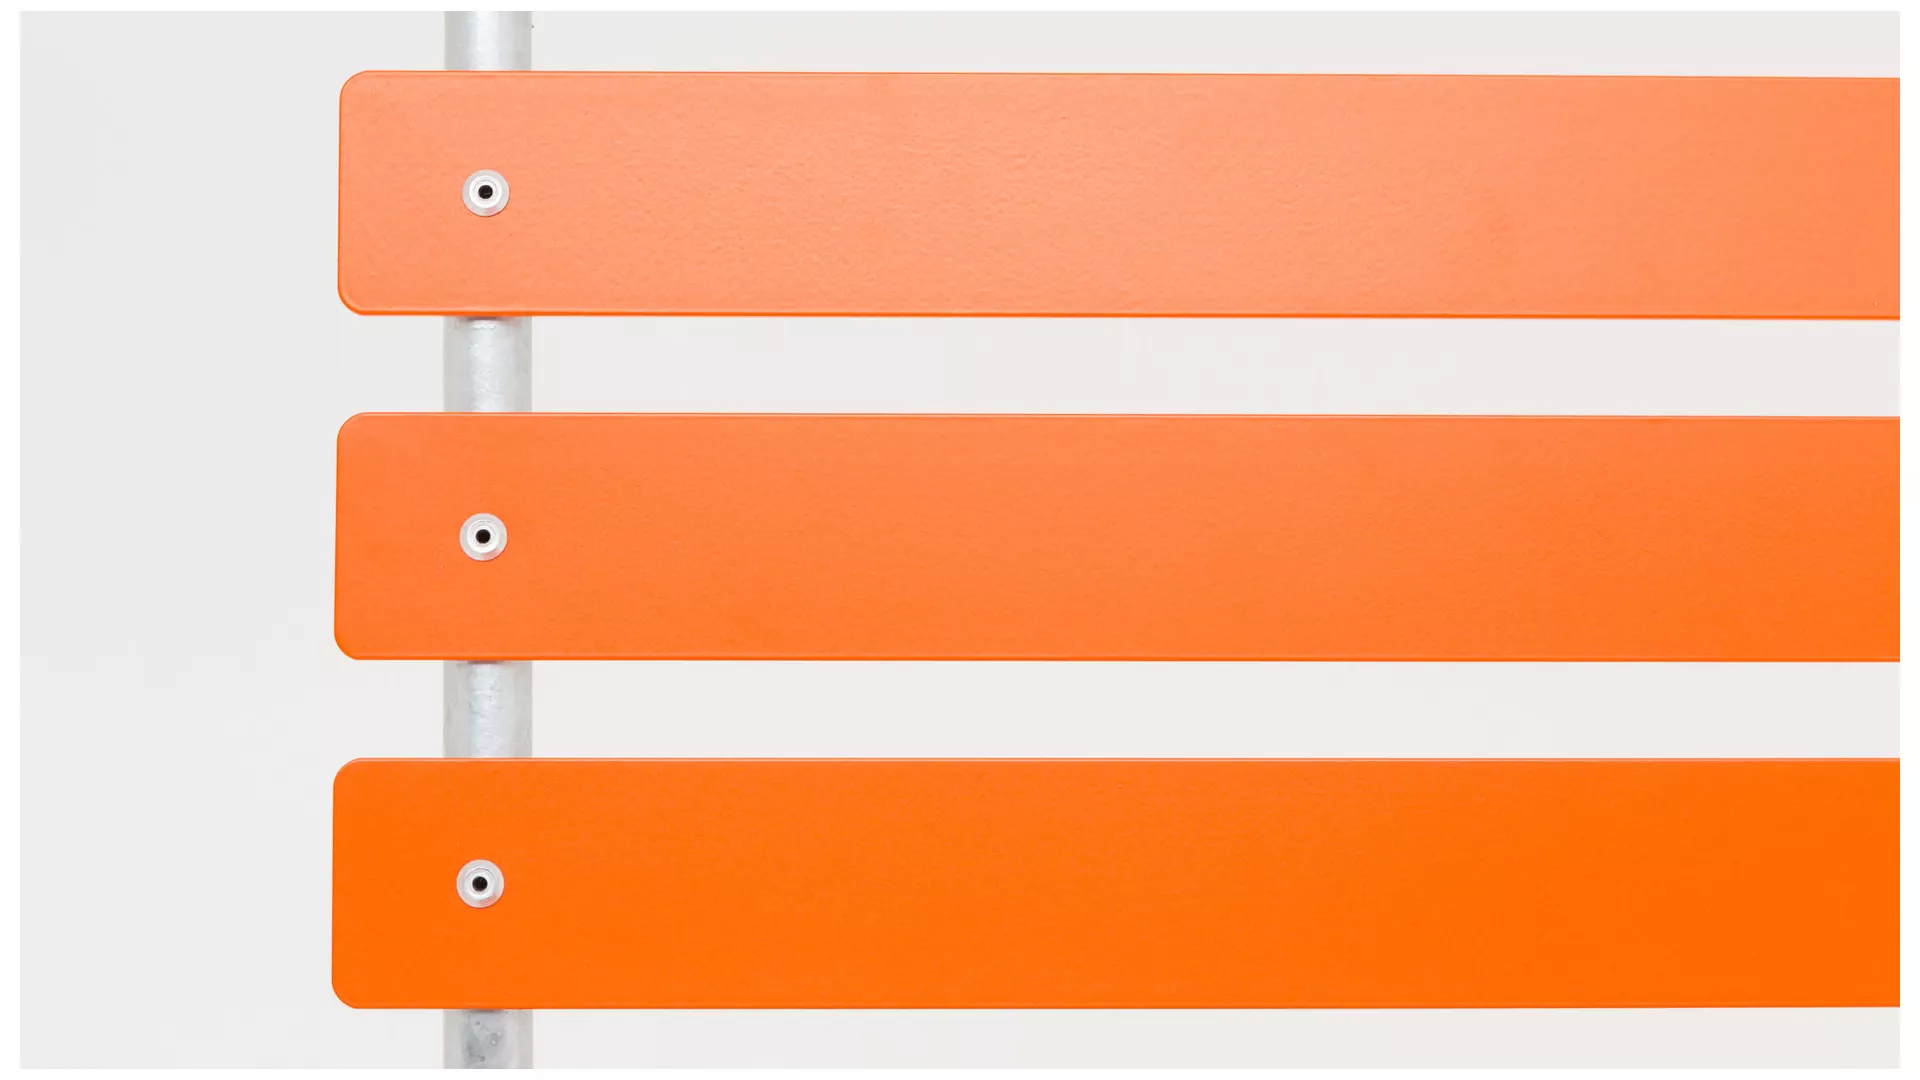 Gartenstuhl Ascona Schaffner / Farbe: Orange / Material: